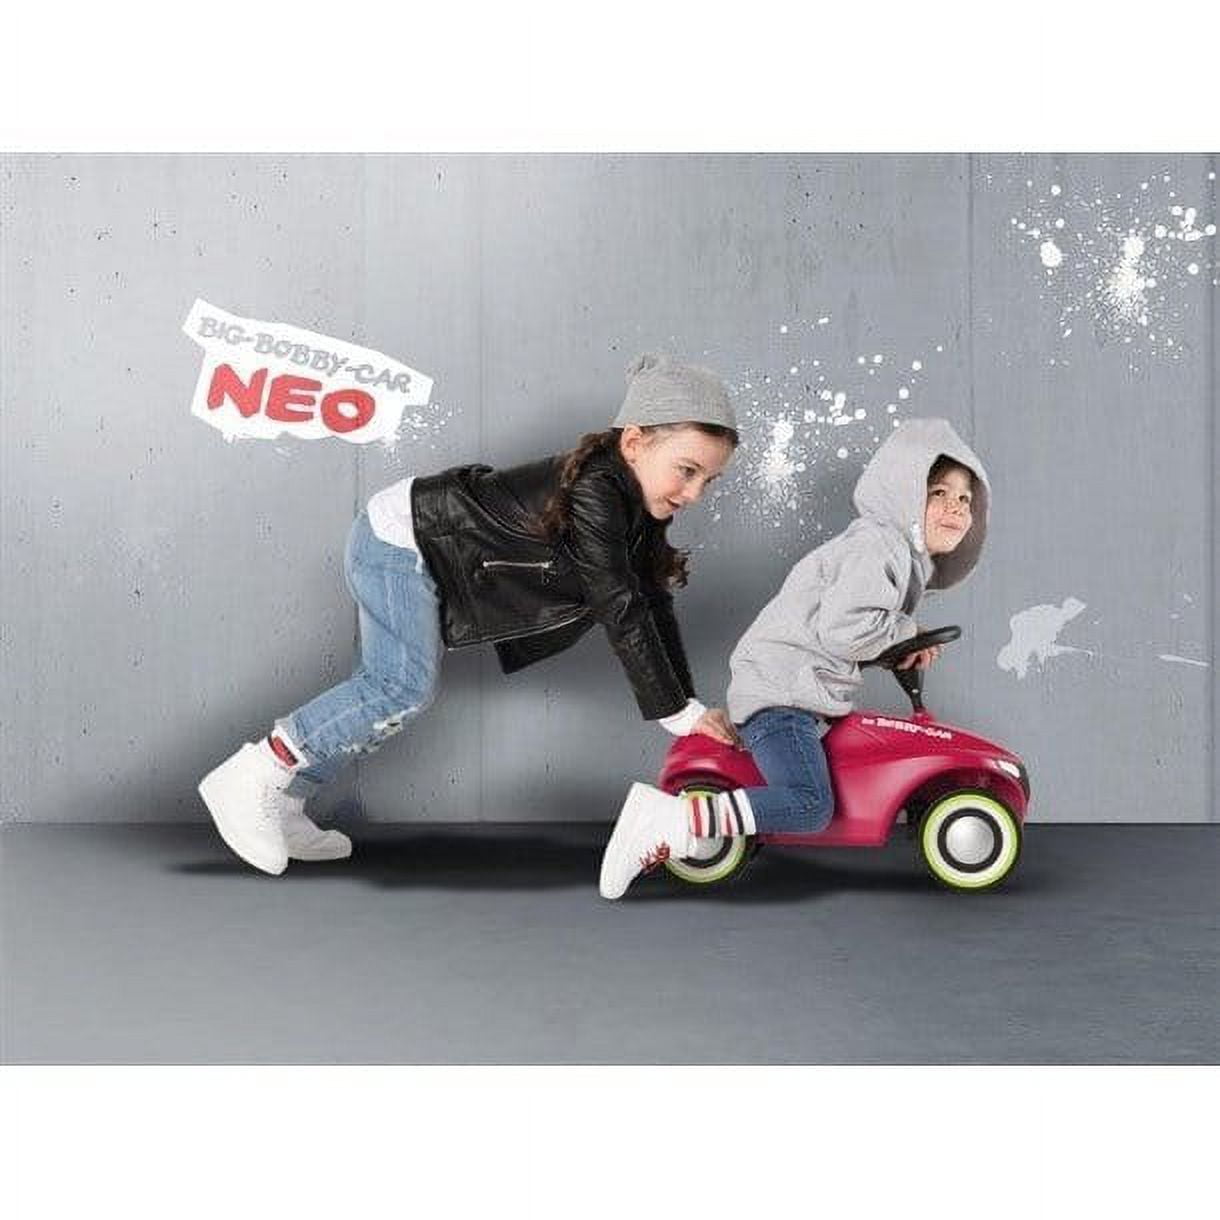 BIG Bobby Car Neo 4 Wheeled Ride-On Car - Pink 800056242